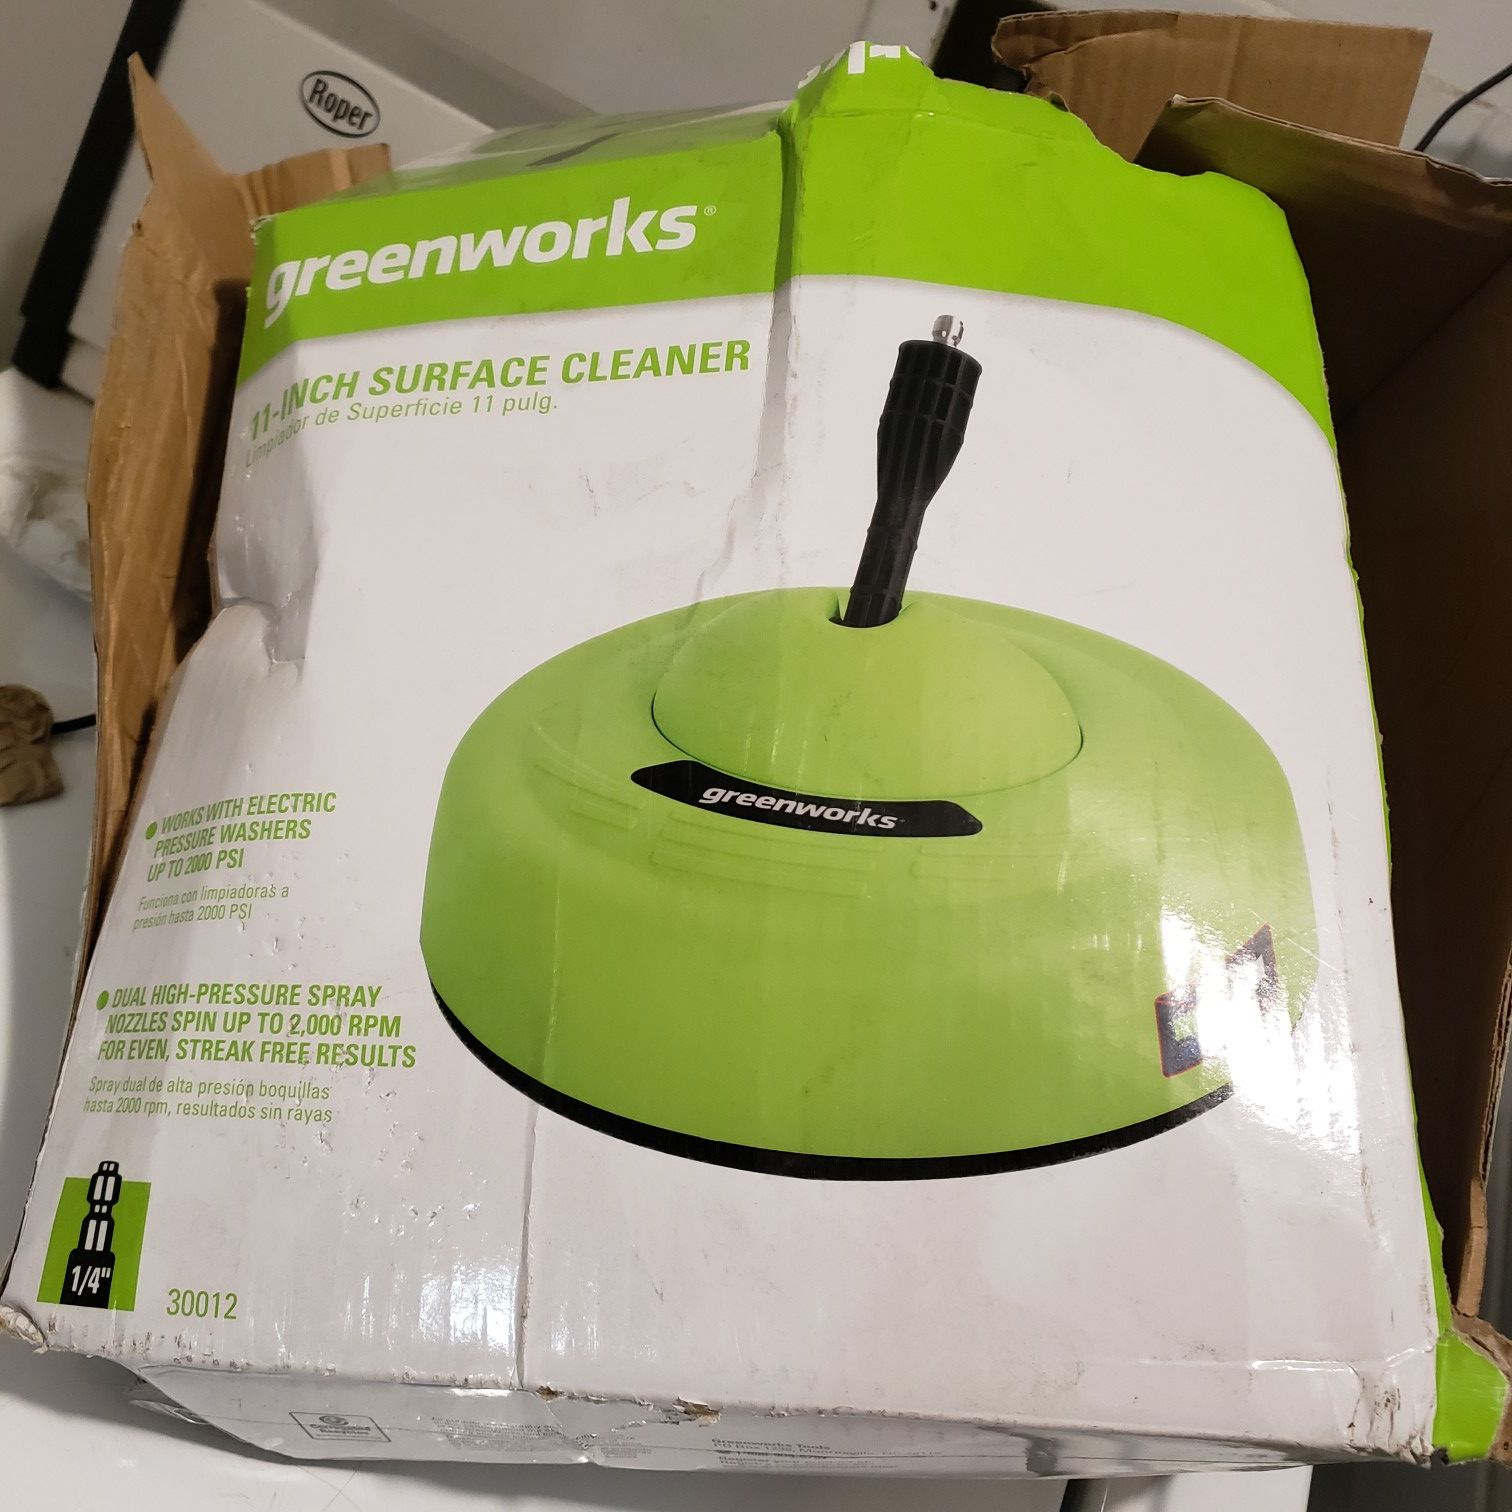 Greenworks surface cleaner